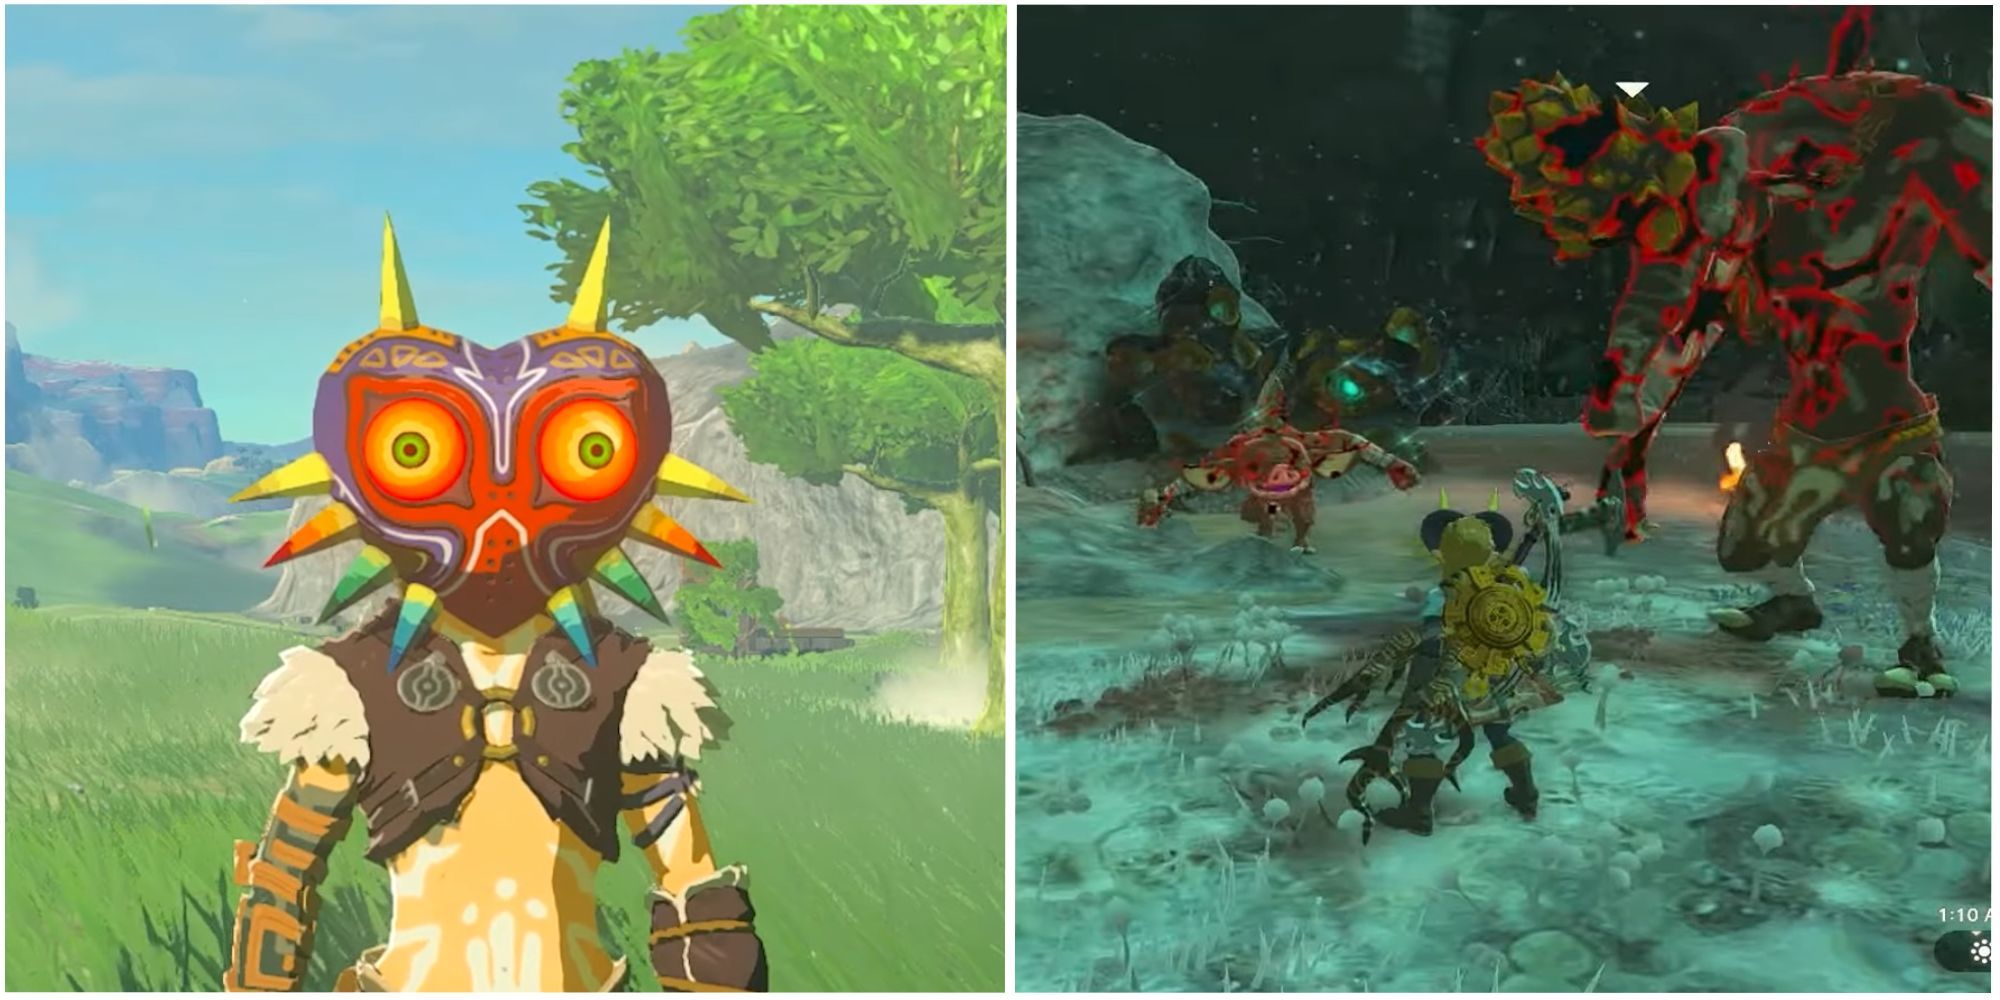 Link wearing Majora's Mask and standing near humanoid enemies